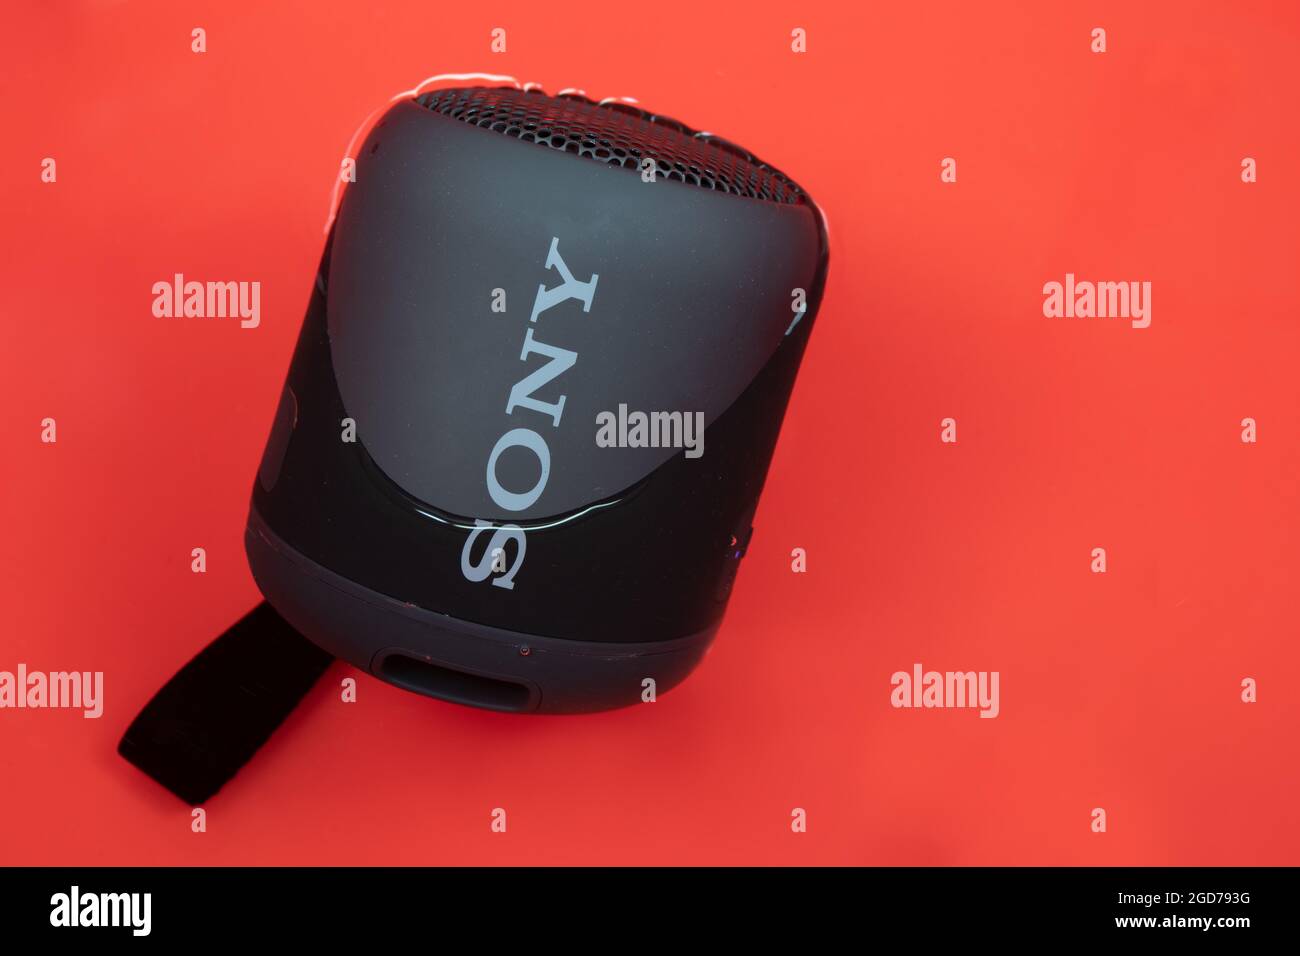 Sony waterproof bluetooth speaker Stock Photo